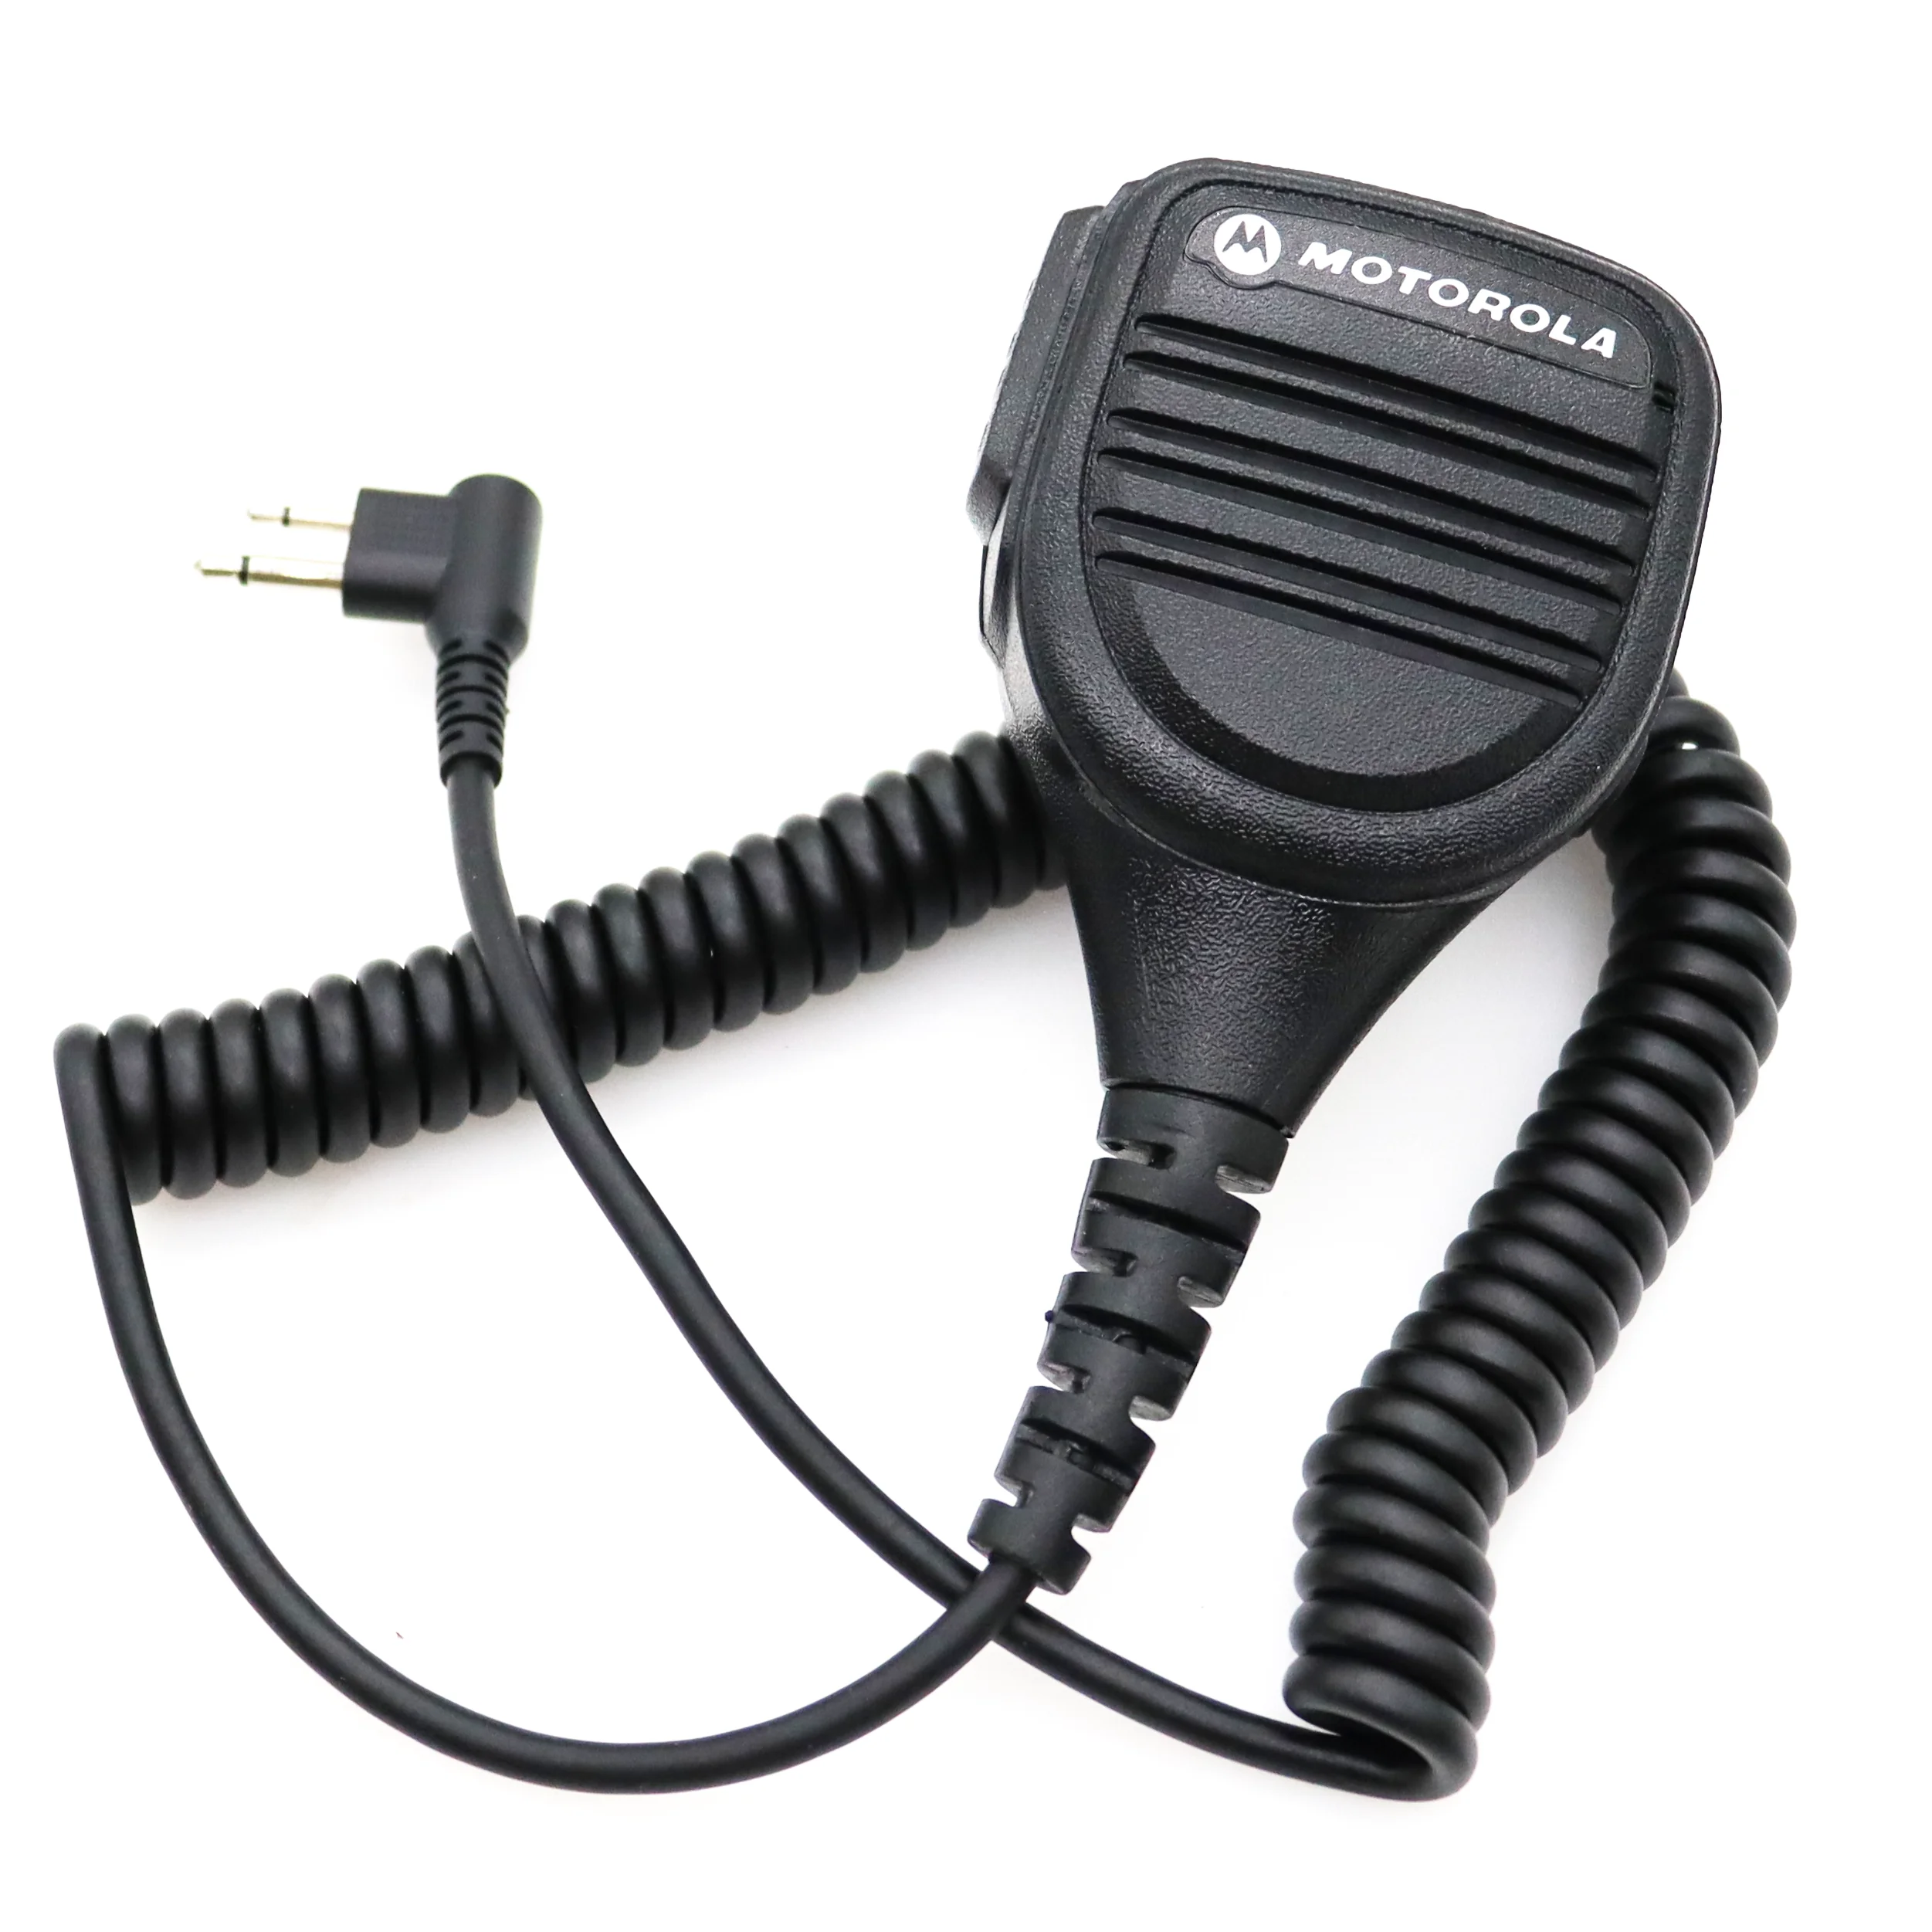 

Heavy Duty Shoulder Remote PTT Handheld Speaker Microphone for Motorola CP200 XLS PR400 EP450 GTX GP300 P1225 Xtni Vl50 Radio